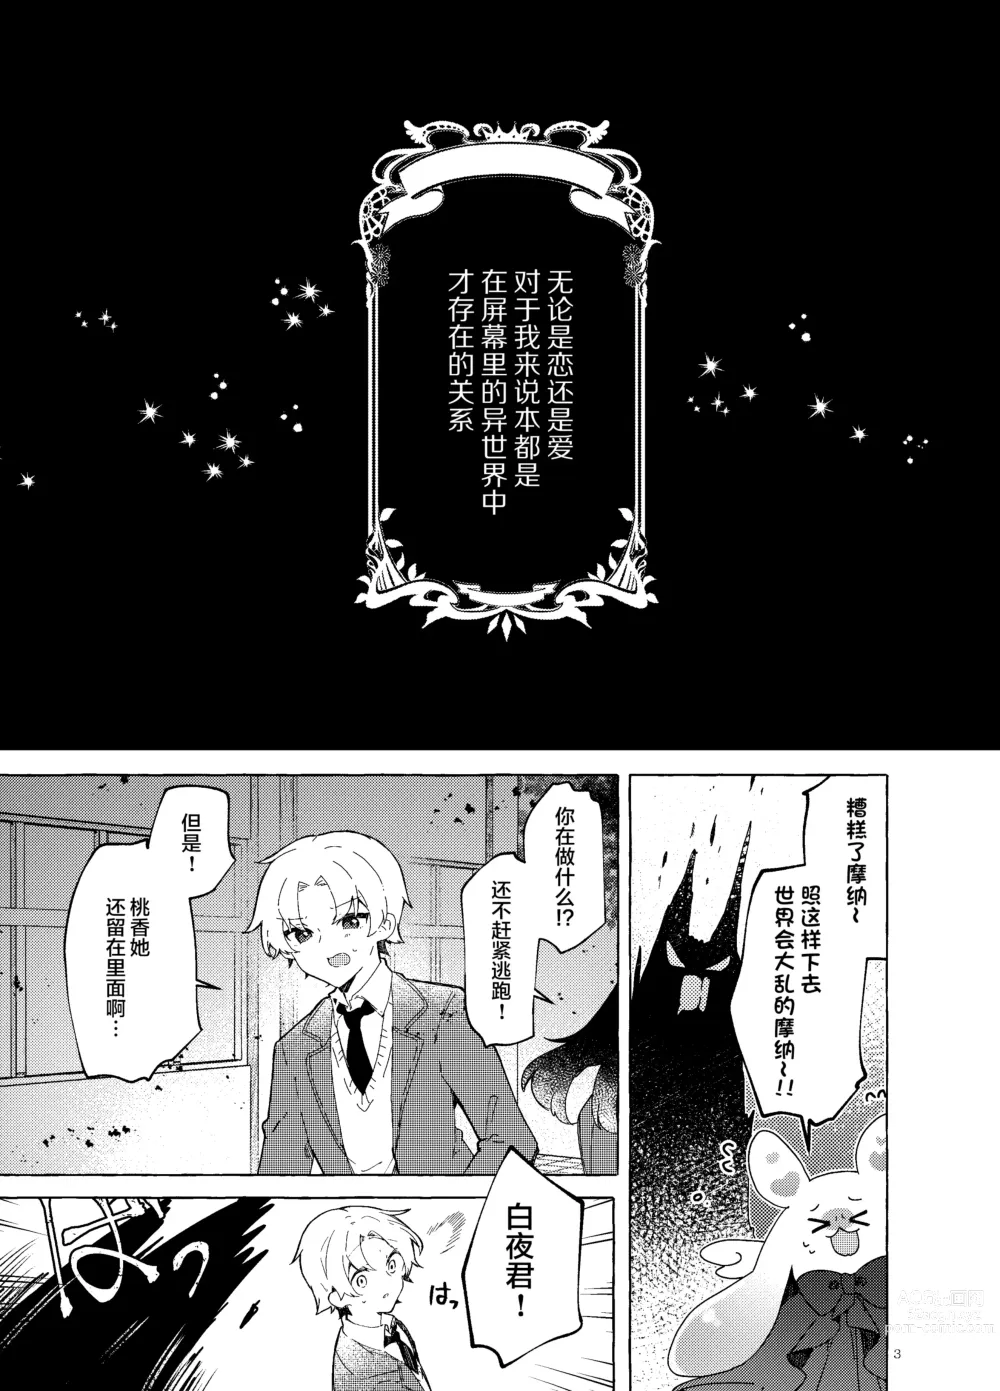 Page 5 of doujinshi Koi to Mahou to Etcetera - Love, Magic, and etc.